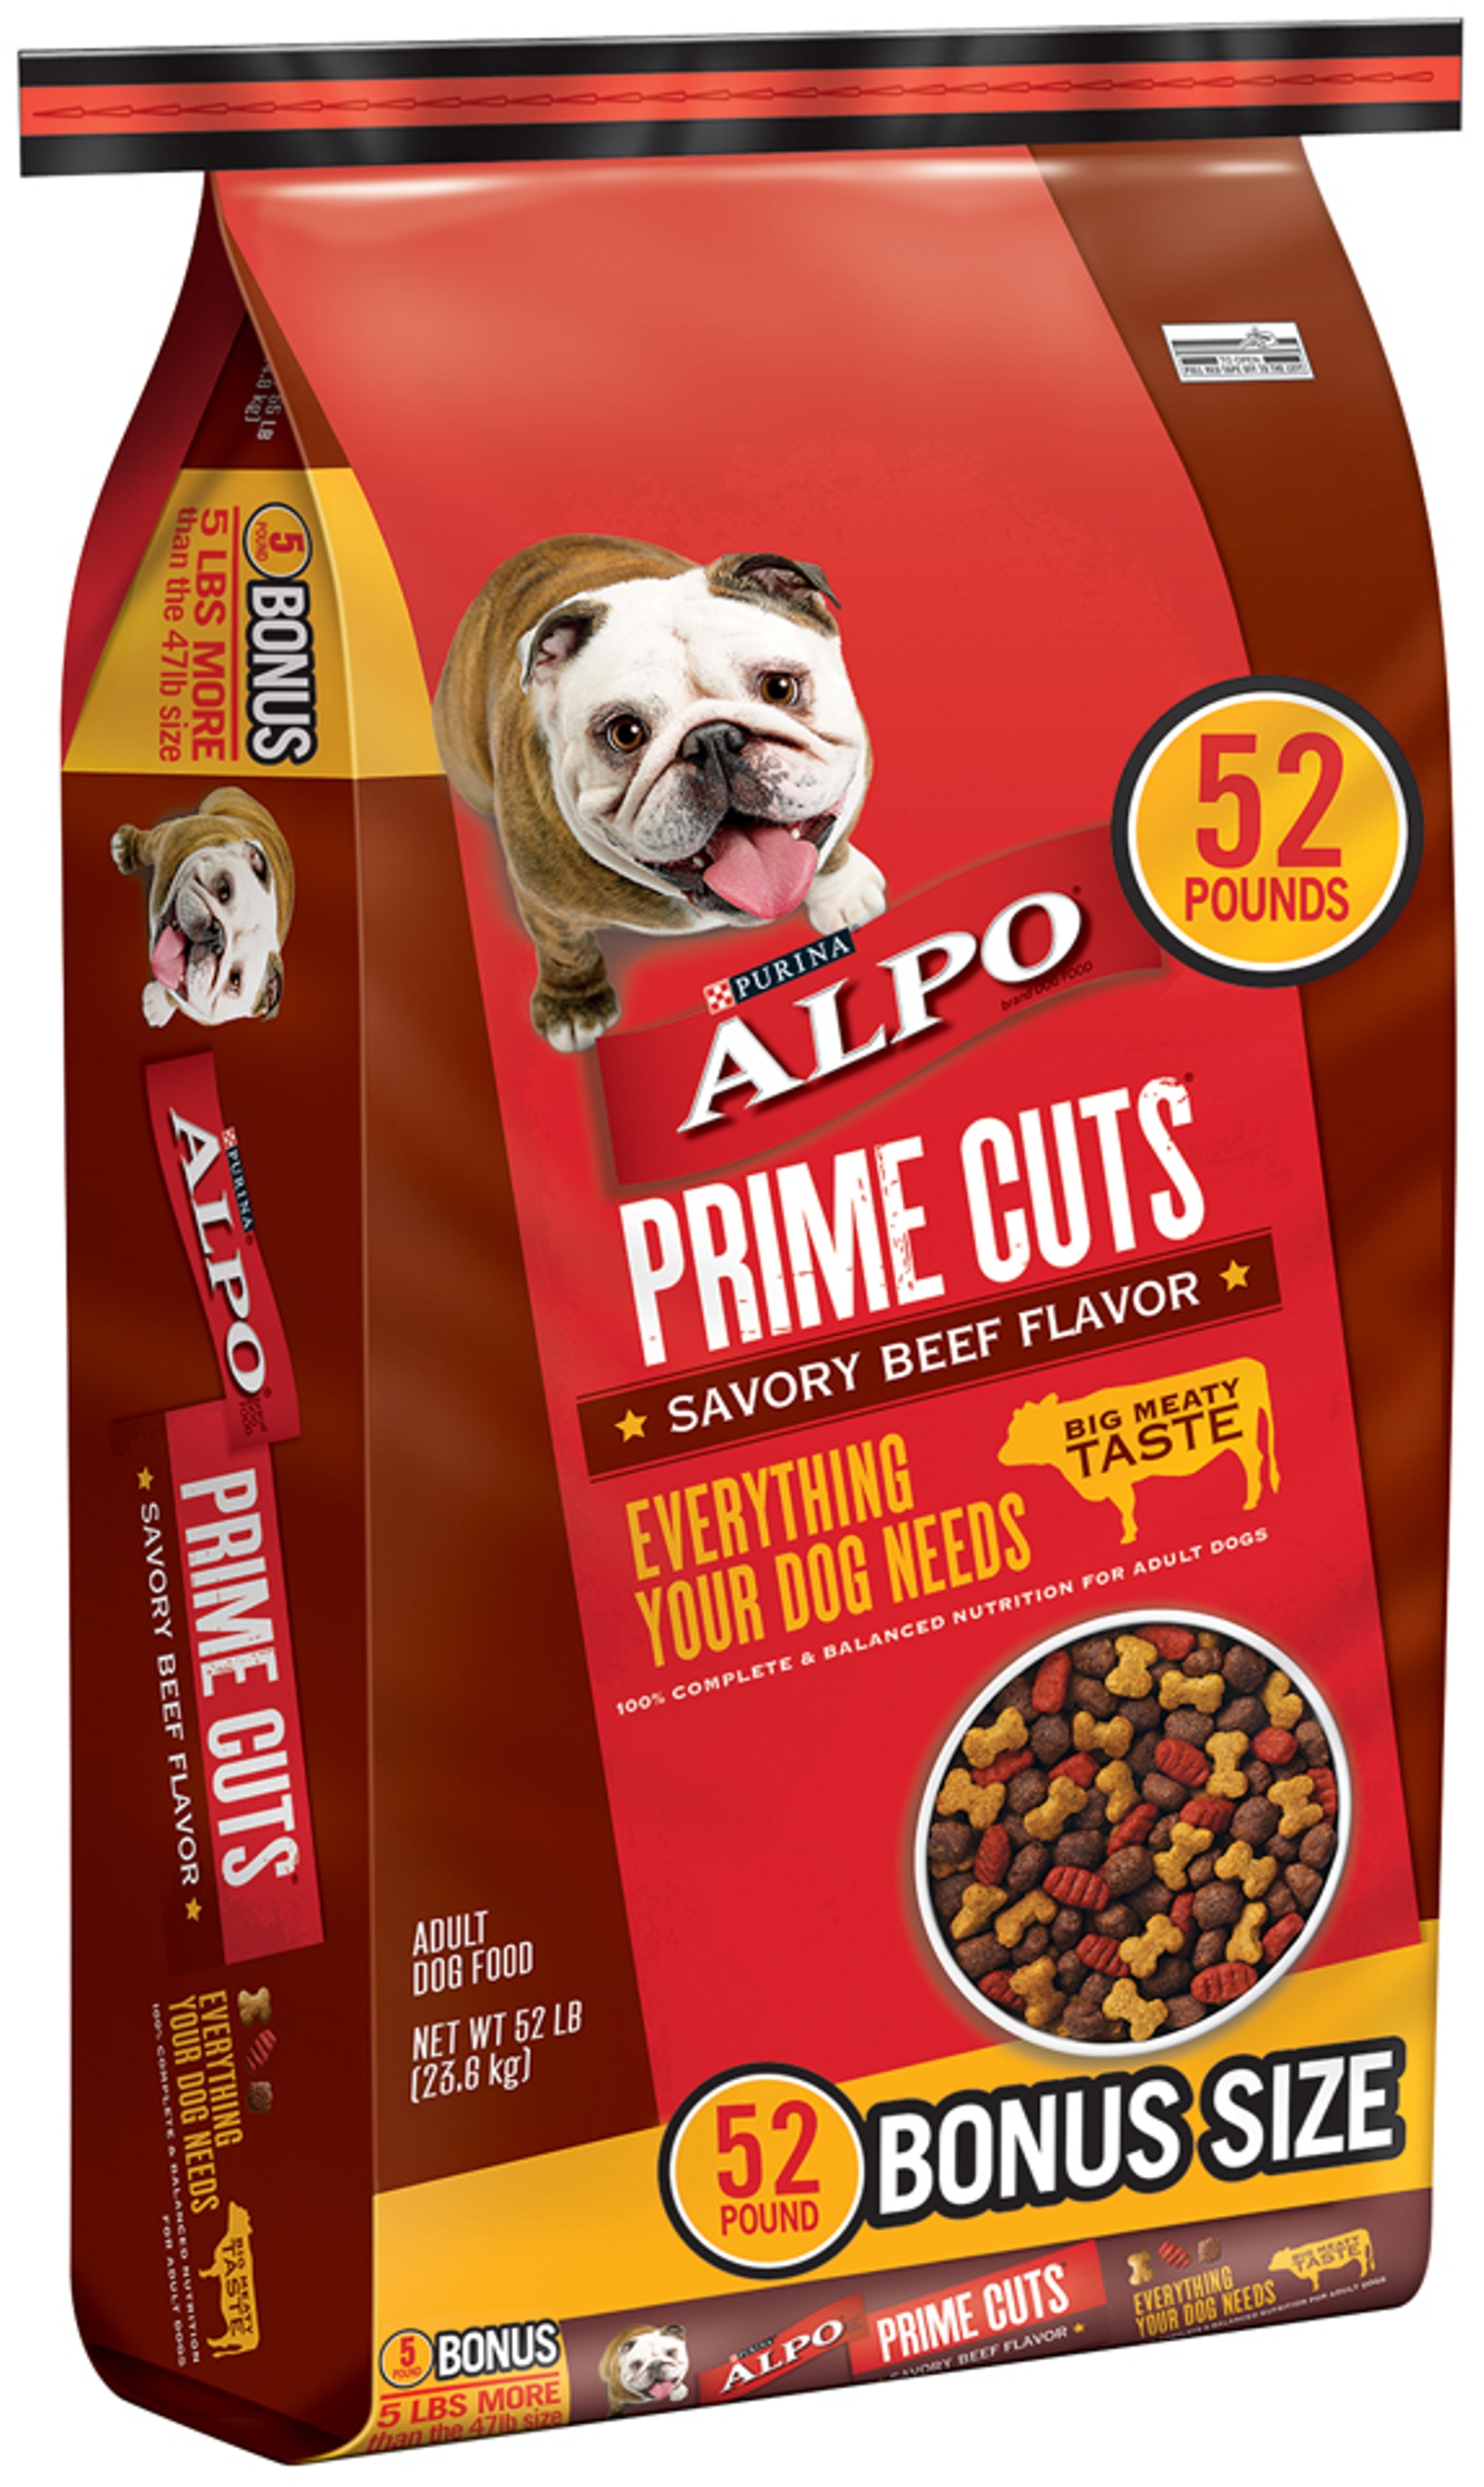 Alpo Dog Food, 52 lbs